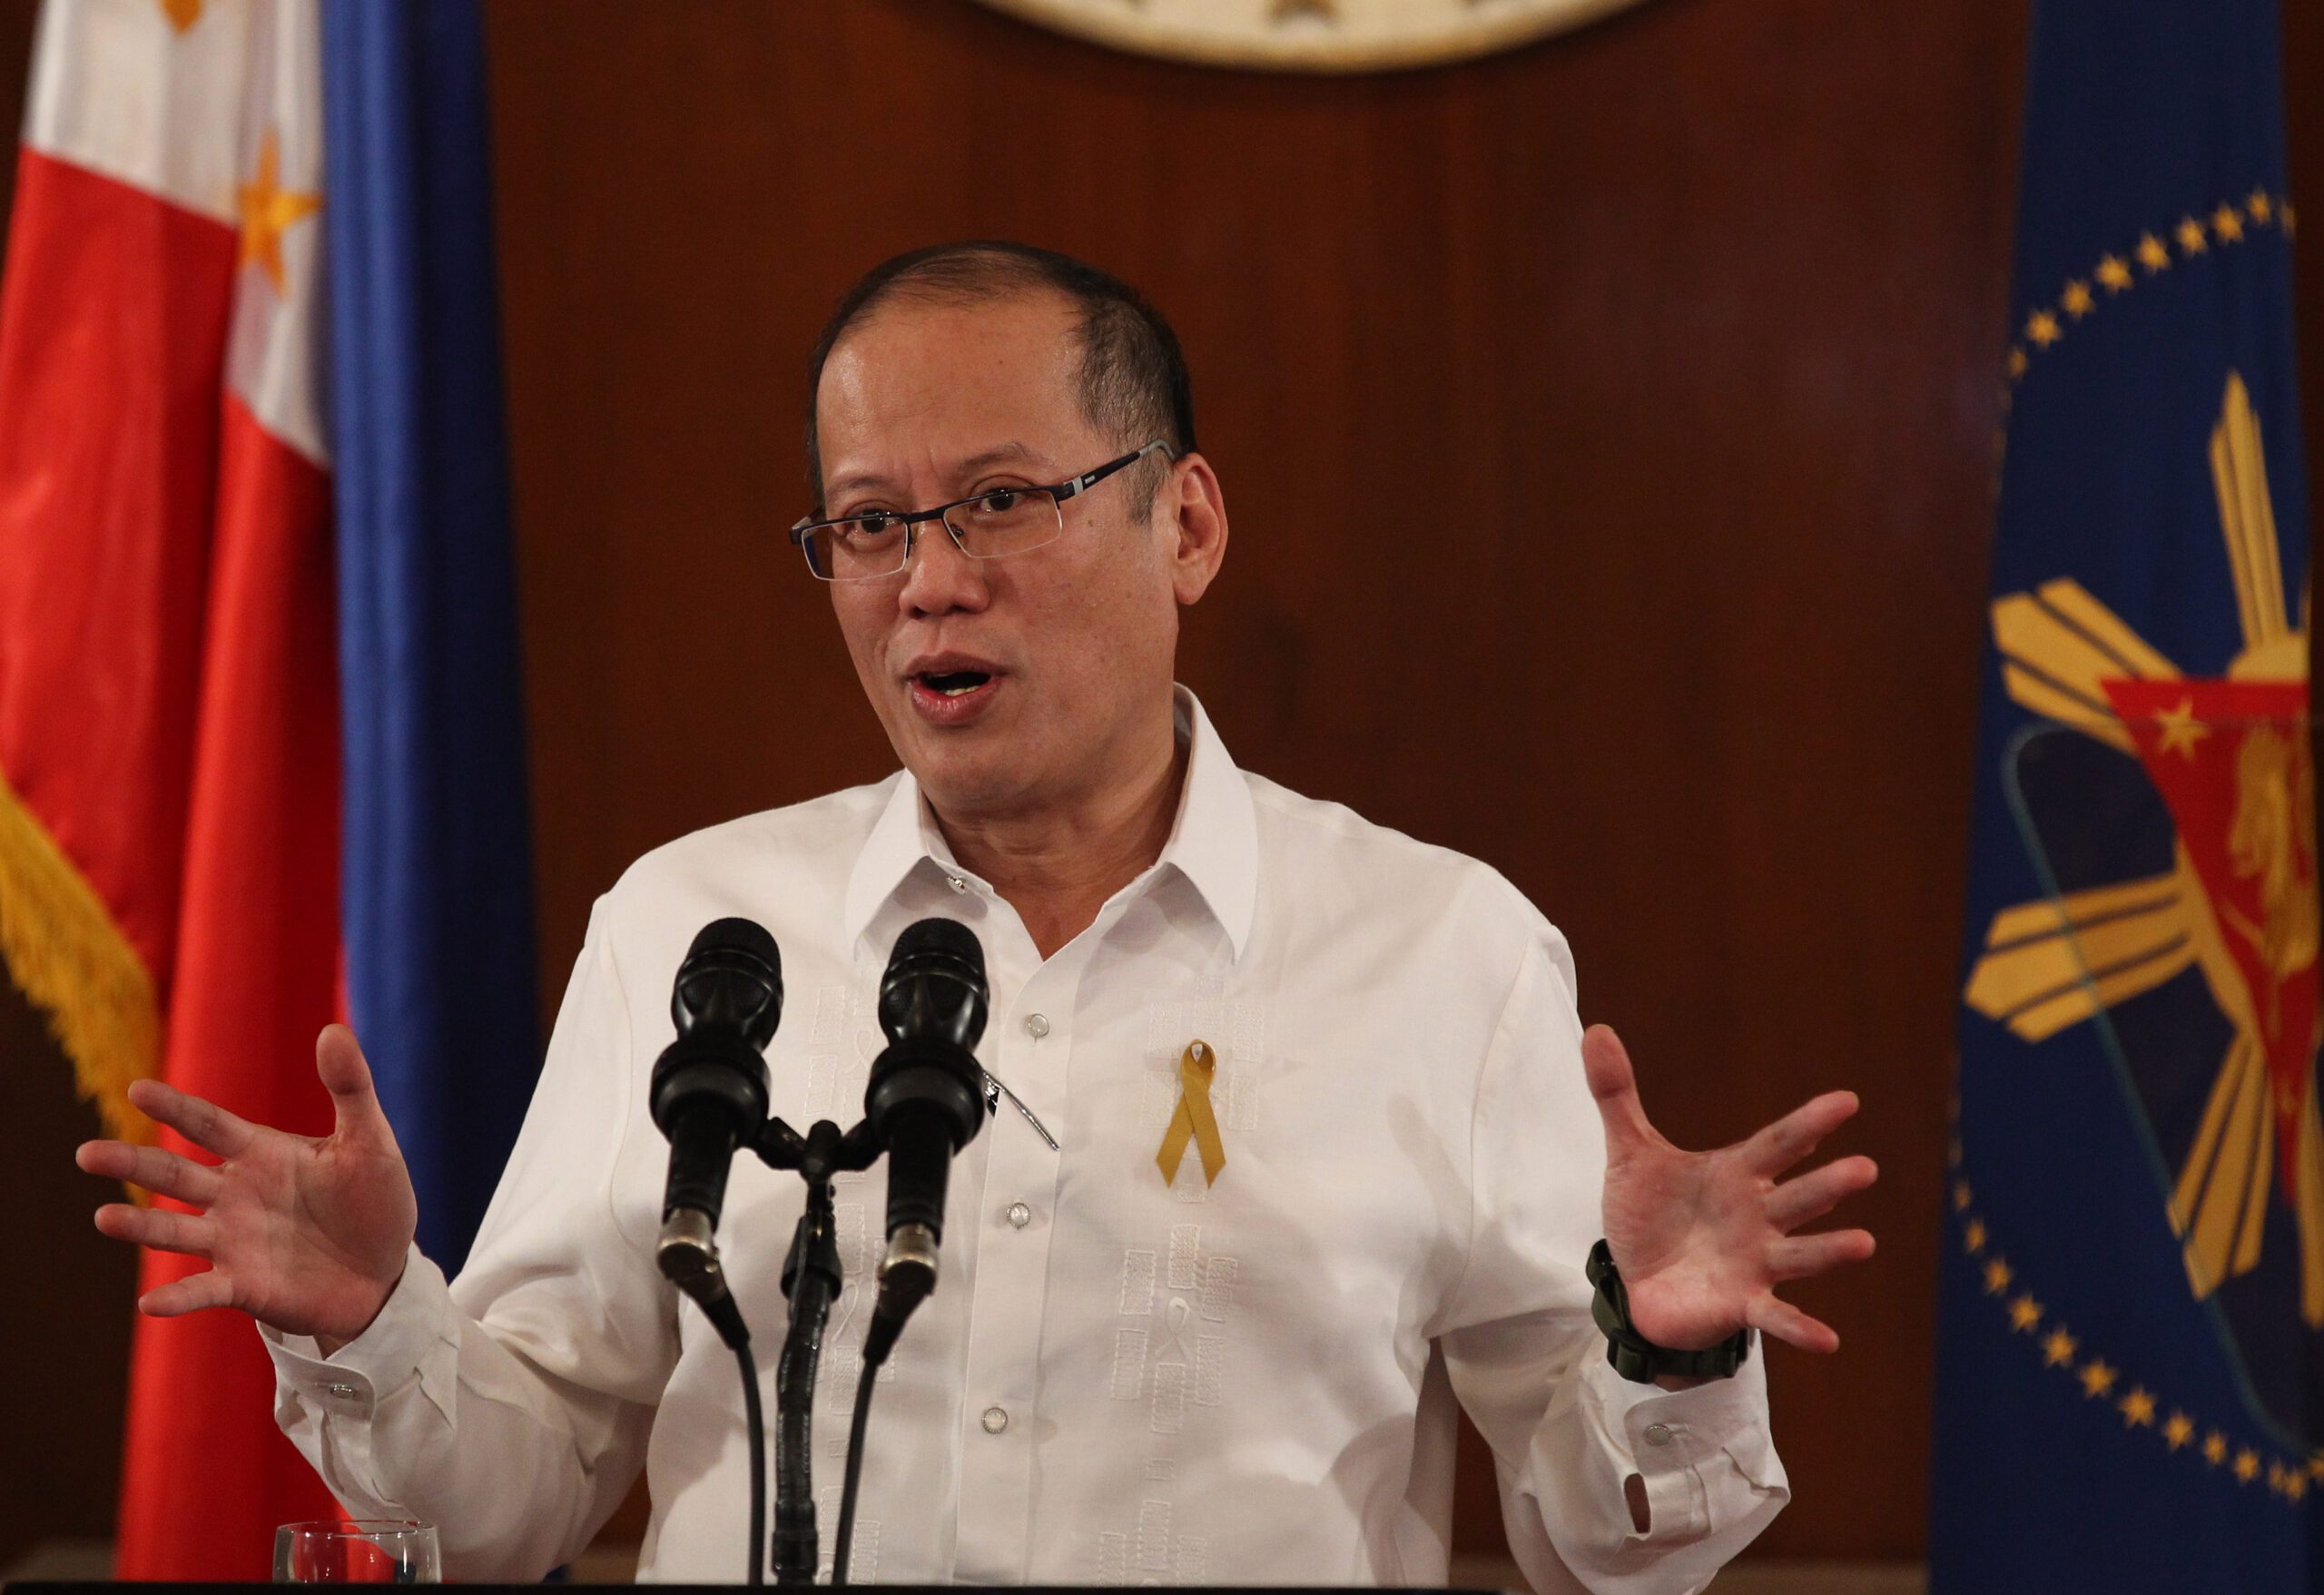 House won’t send questions to Aquino on Mamasapano